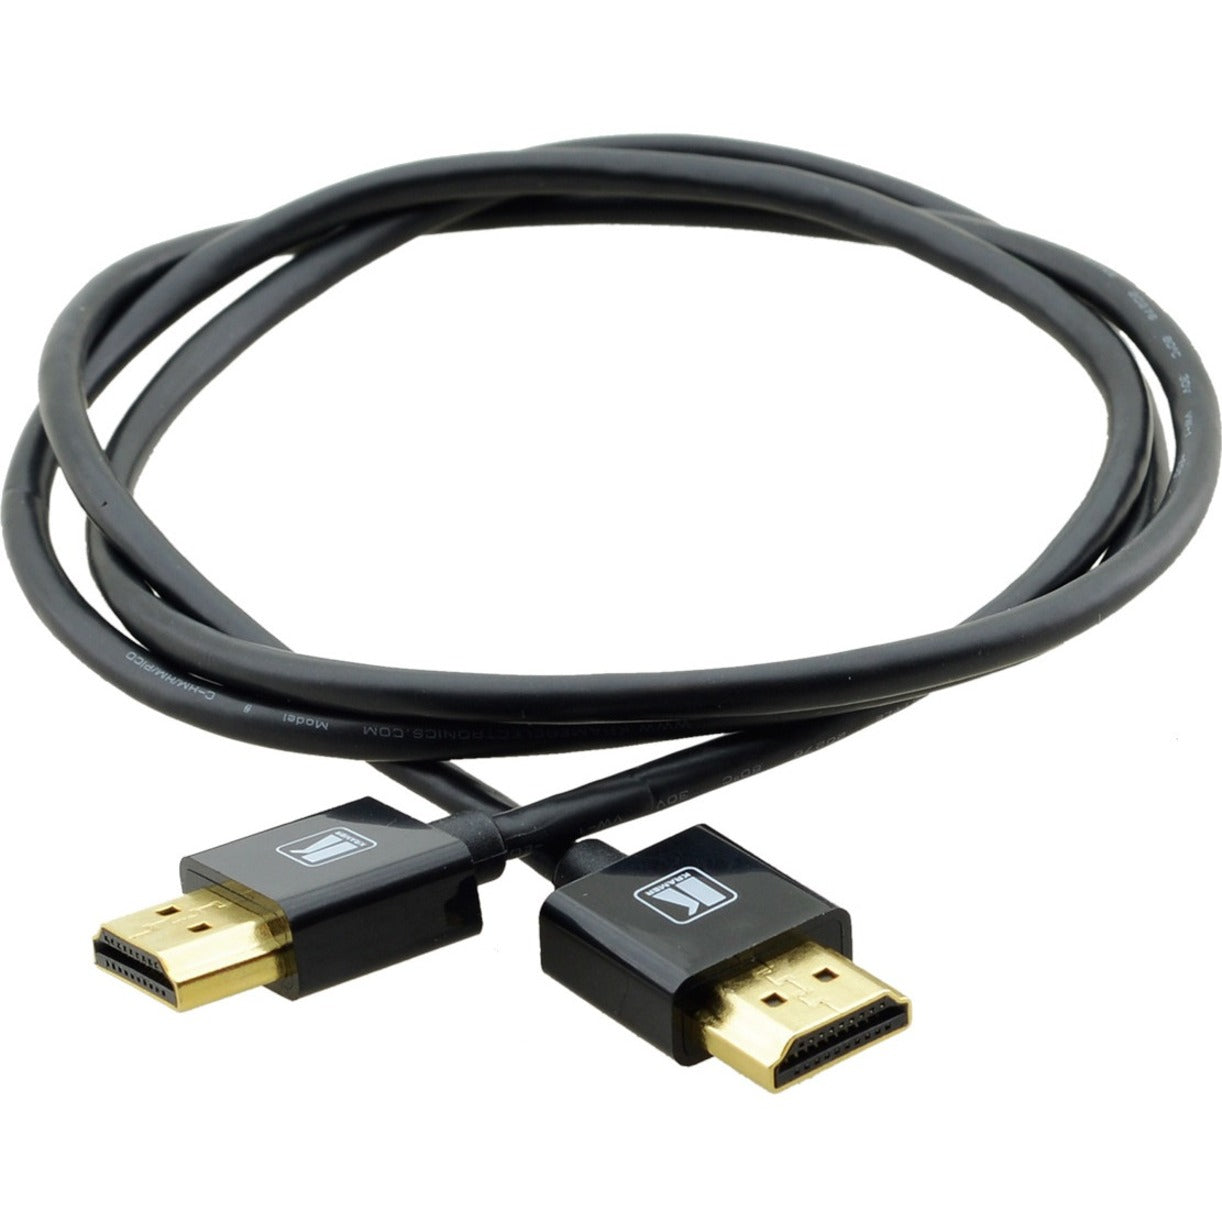 Kramer C-HM/HM/PICO/BK-10 Ultra Slim High-Speed HDMI Flexible Cable with Ethernet, 10 ft, Black